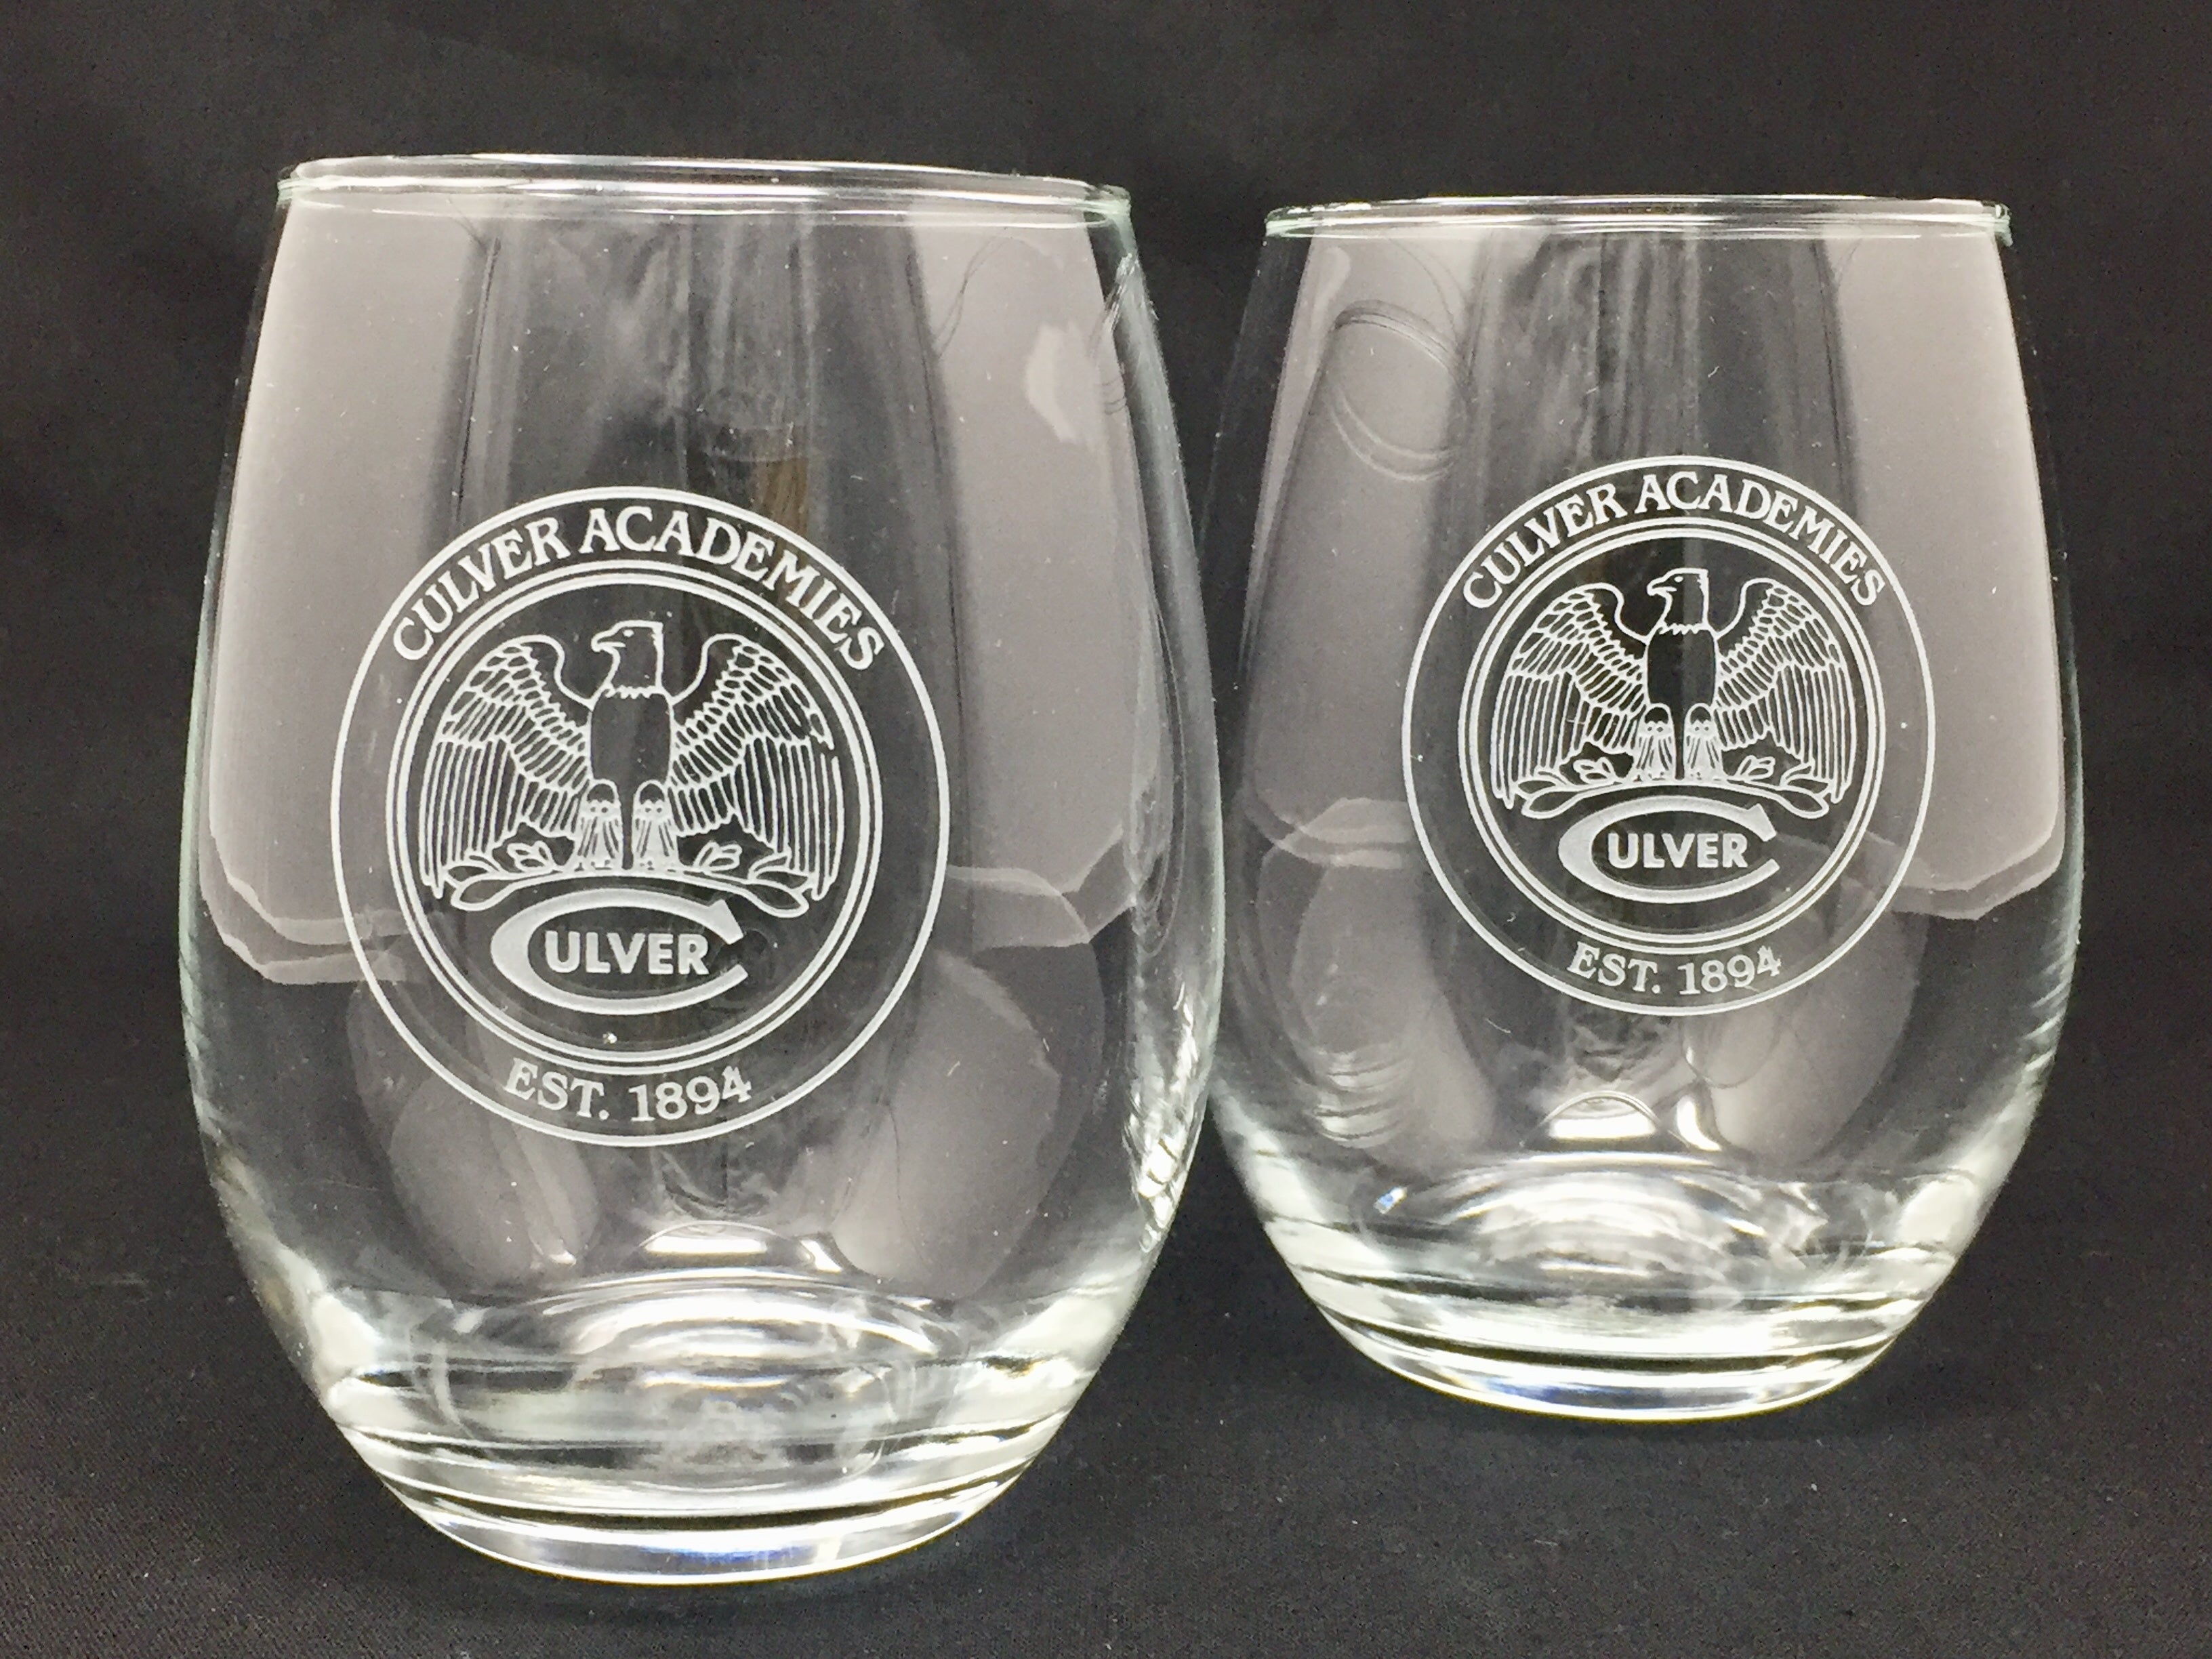 Culver Academies Stemless Wine Glasses Set of 2 - 15oz